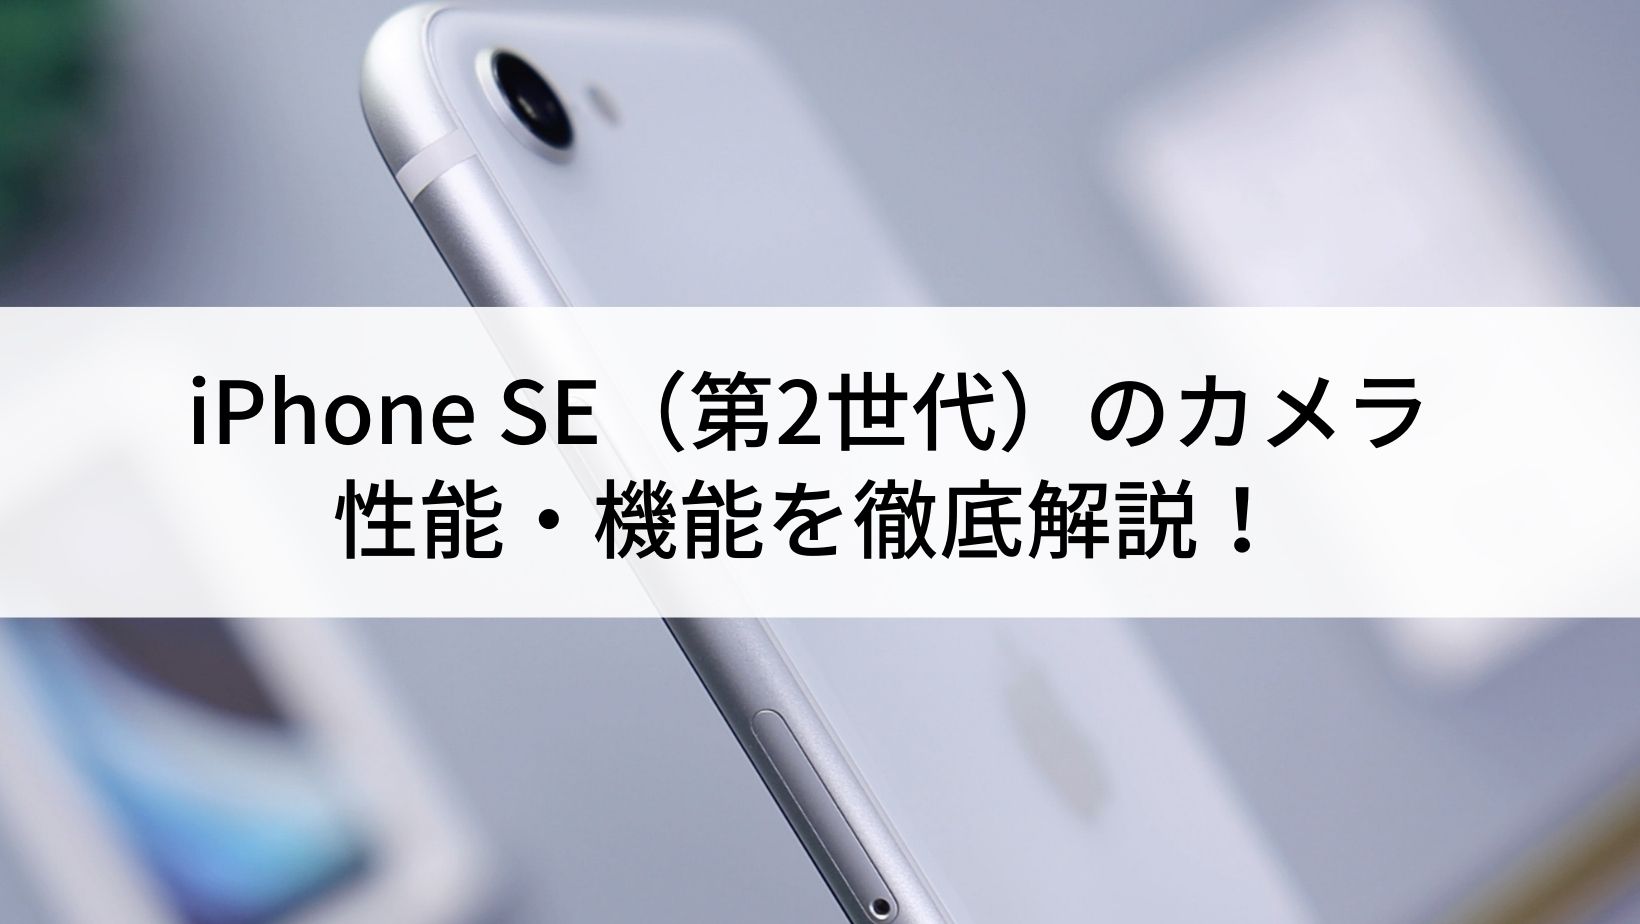 iPhone SE (第2世代)の中古|全商品SIMフリー【にこスマ】